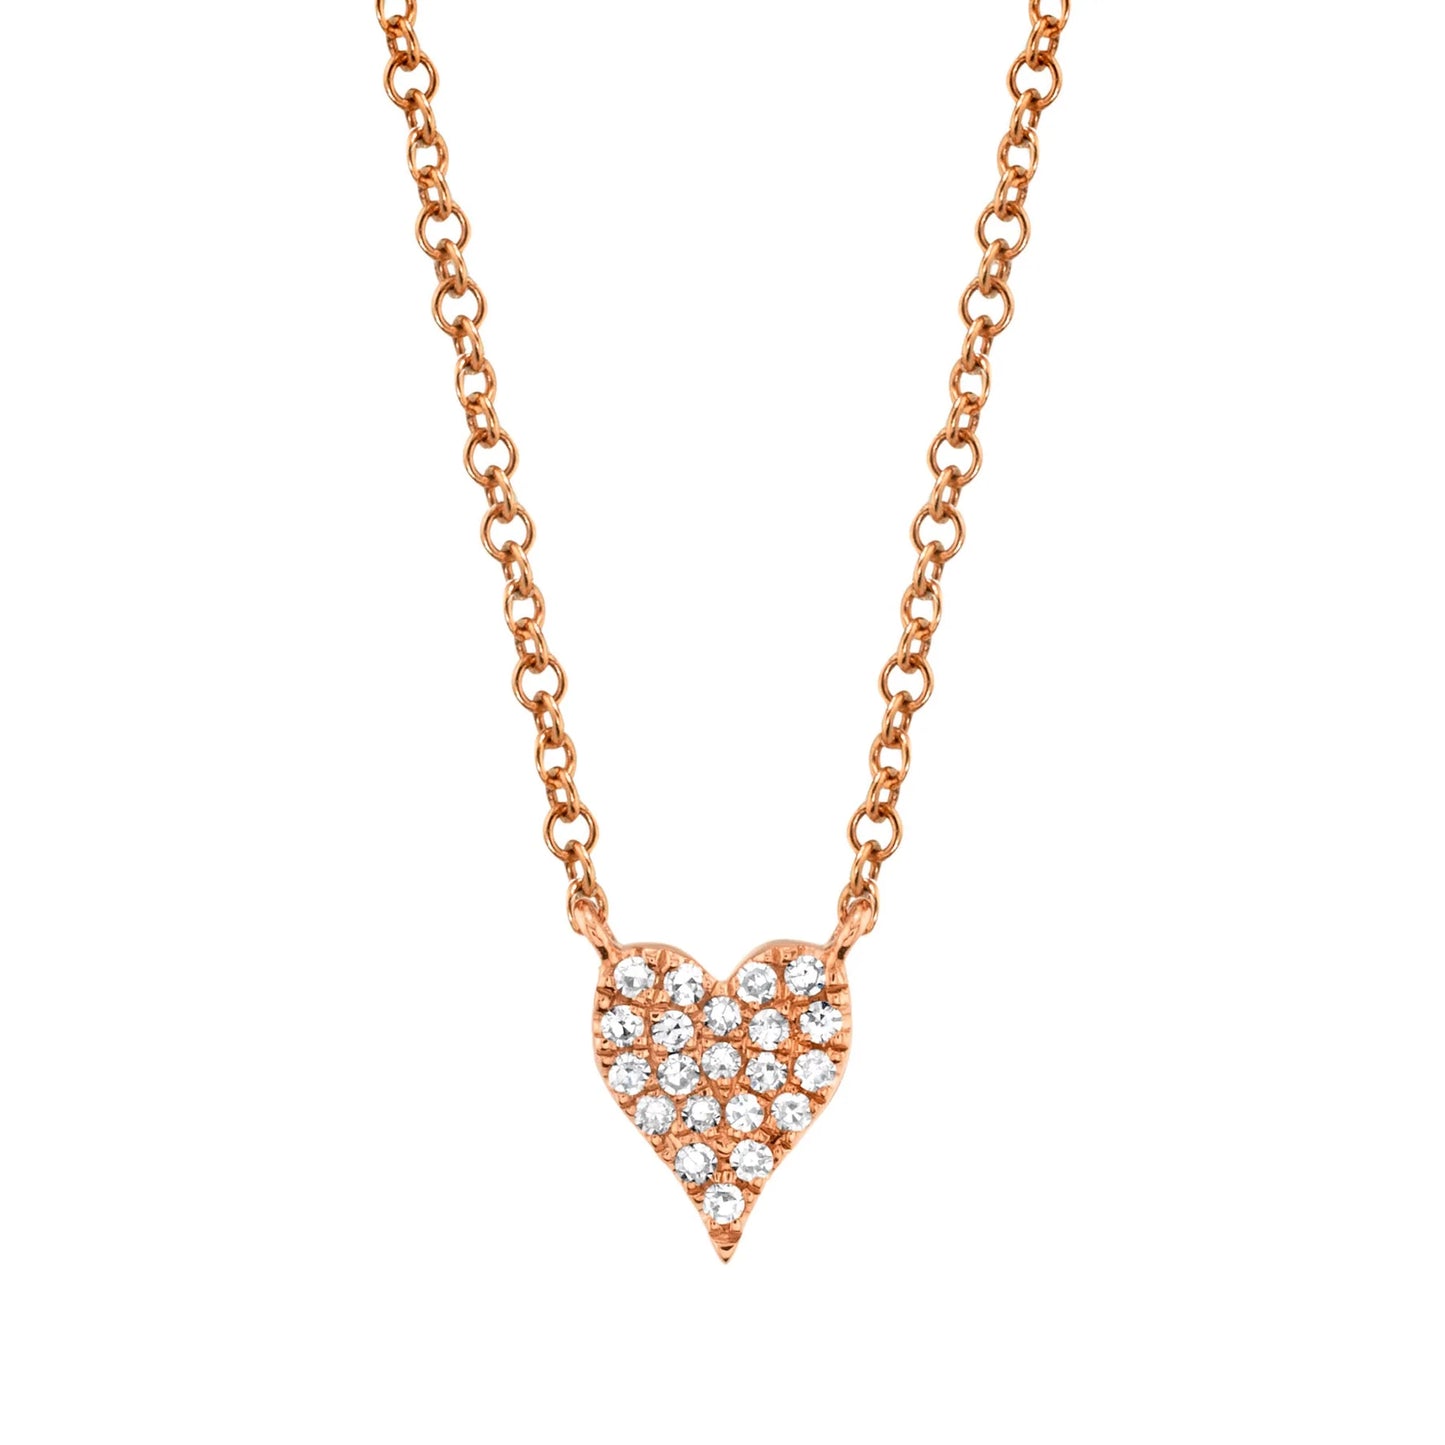 Small Tiny Diamond Heart Pendant Necklace 14K White Gold 0.05CT Womens Children